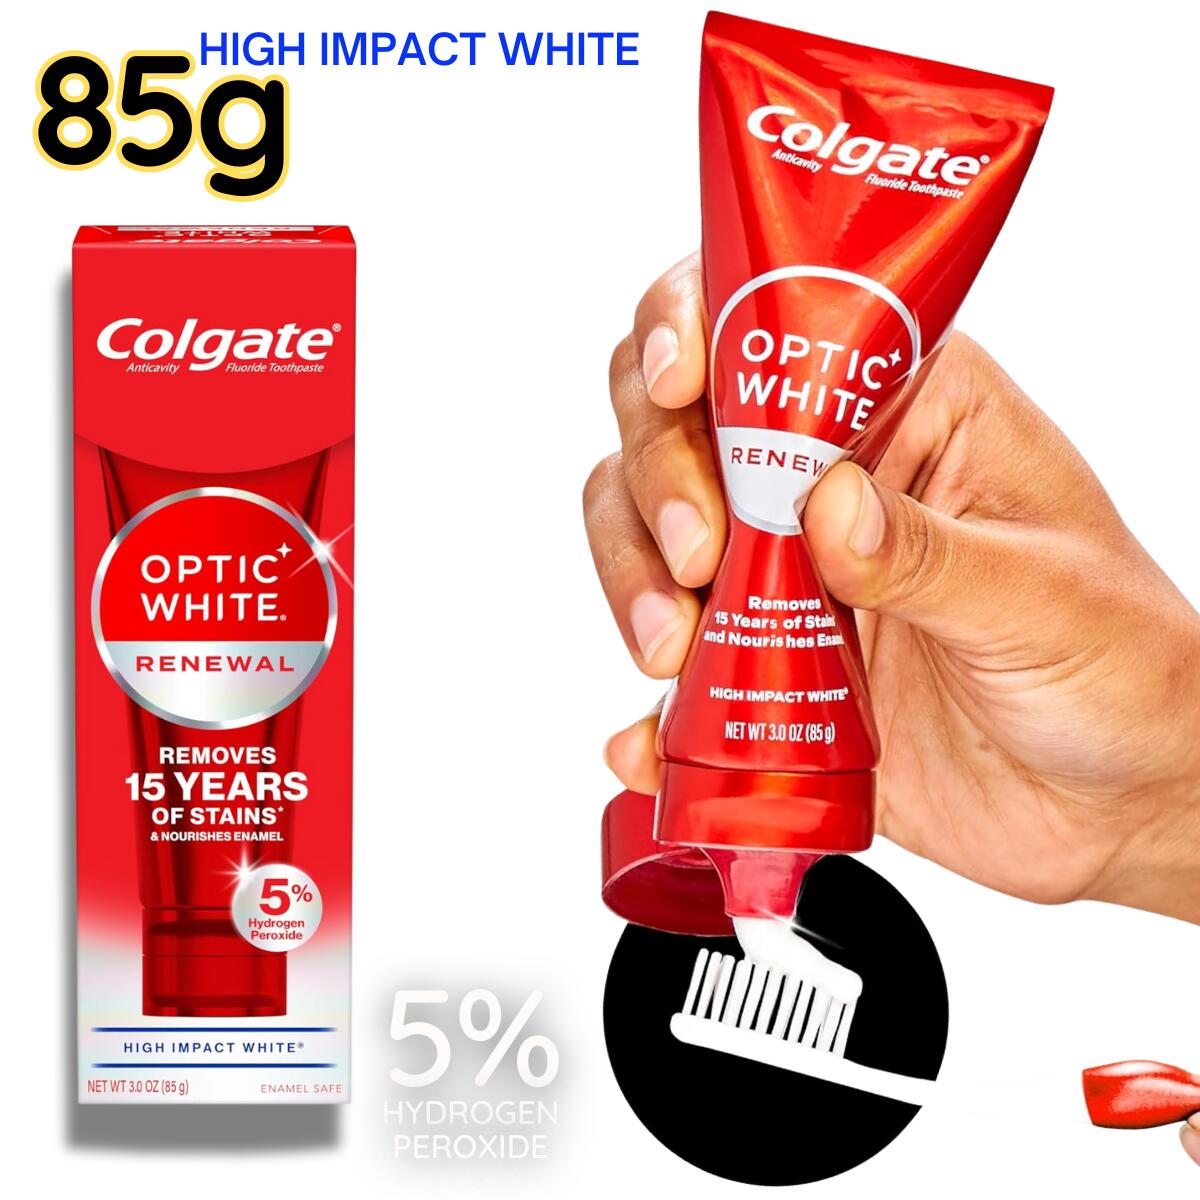 Colgate 最新版 リニューアル ハイインパクト ホワイト 5%過酸化水素 歯磨き粉 Optic White Renewal High Impact White 85g【海外配送】